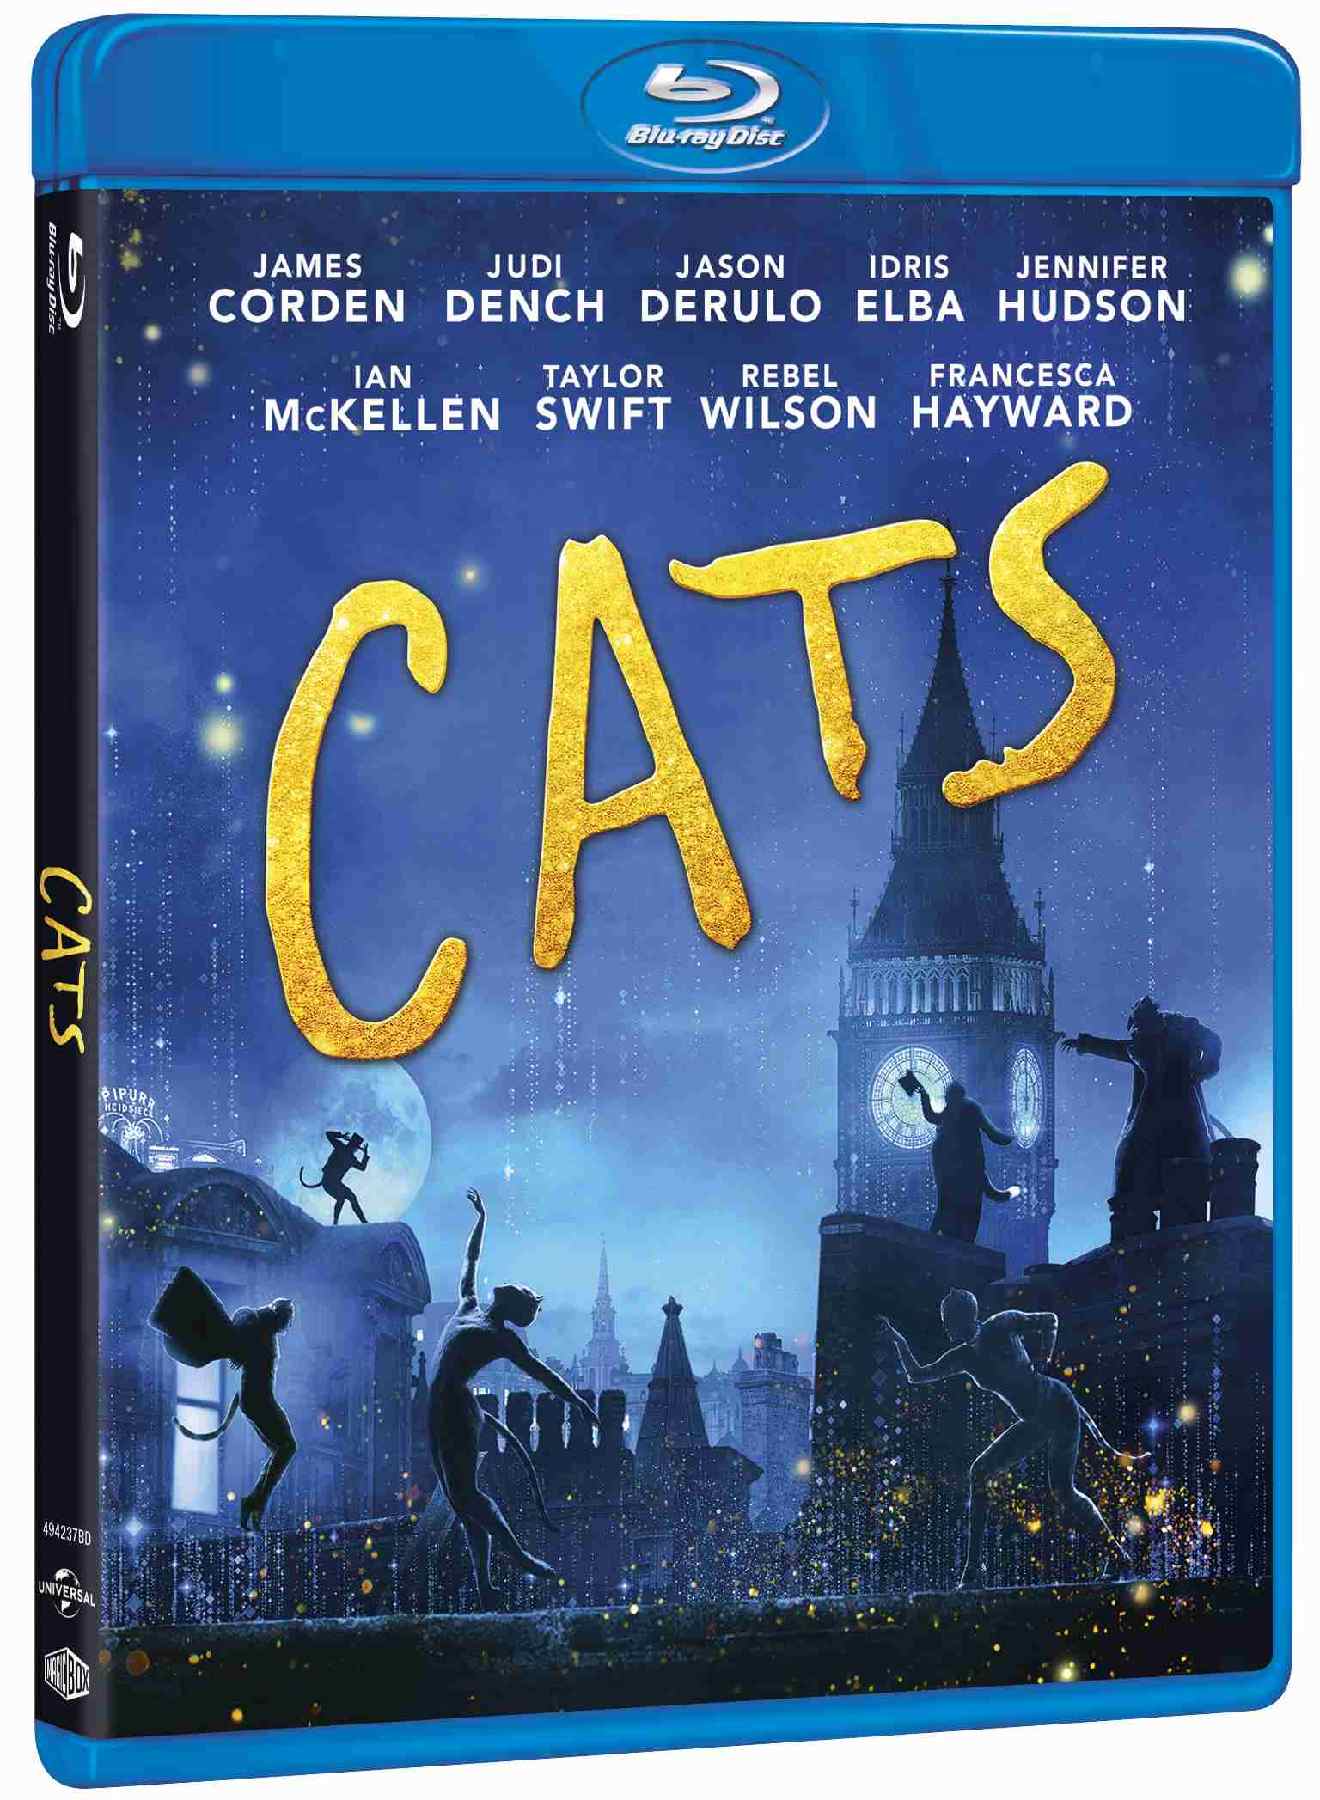 Cats - Blu-ray